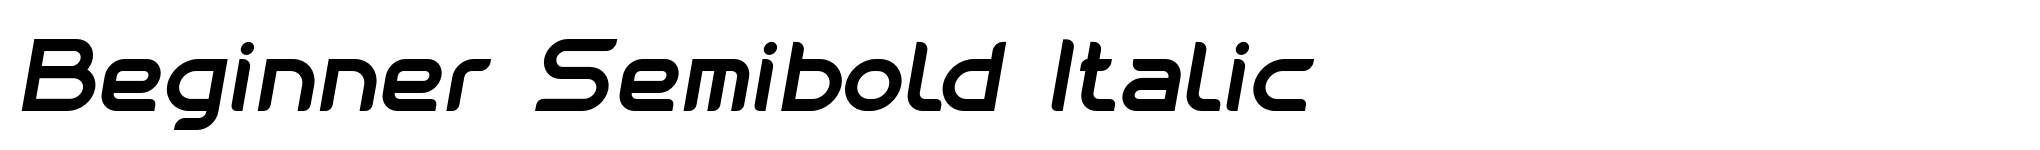 Beginner Semibold Italic image